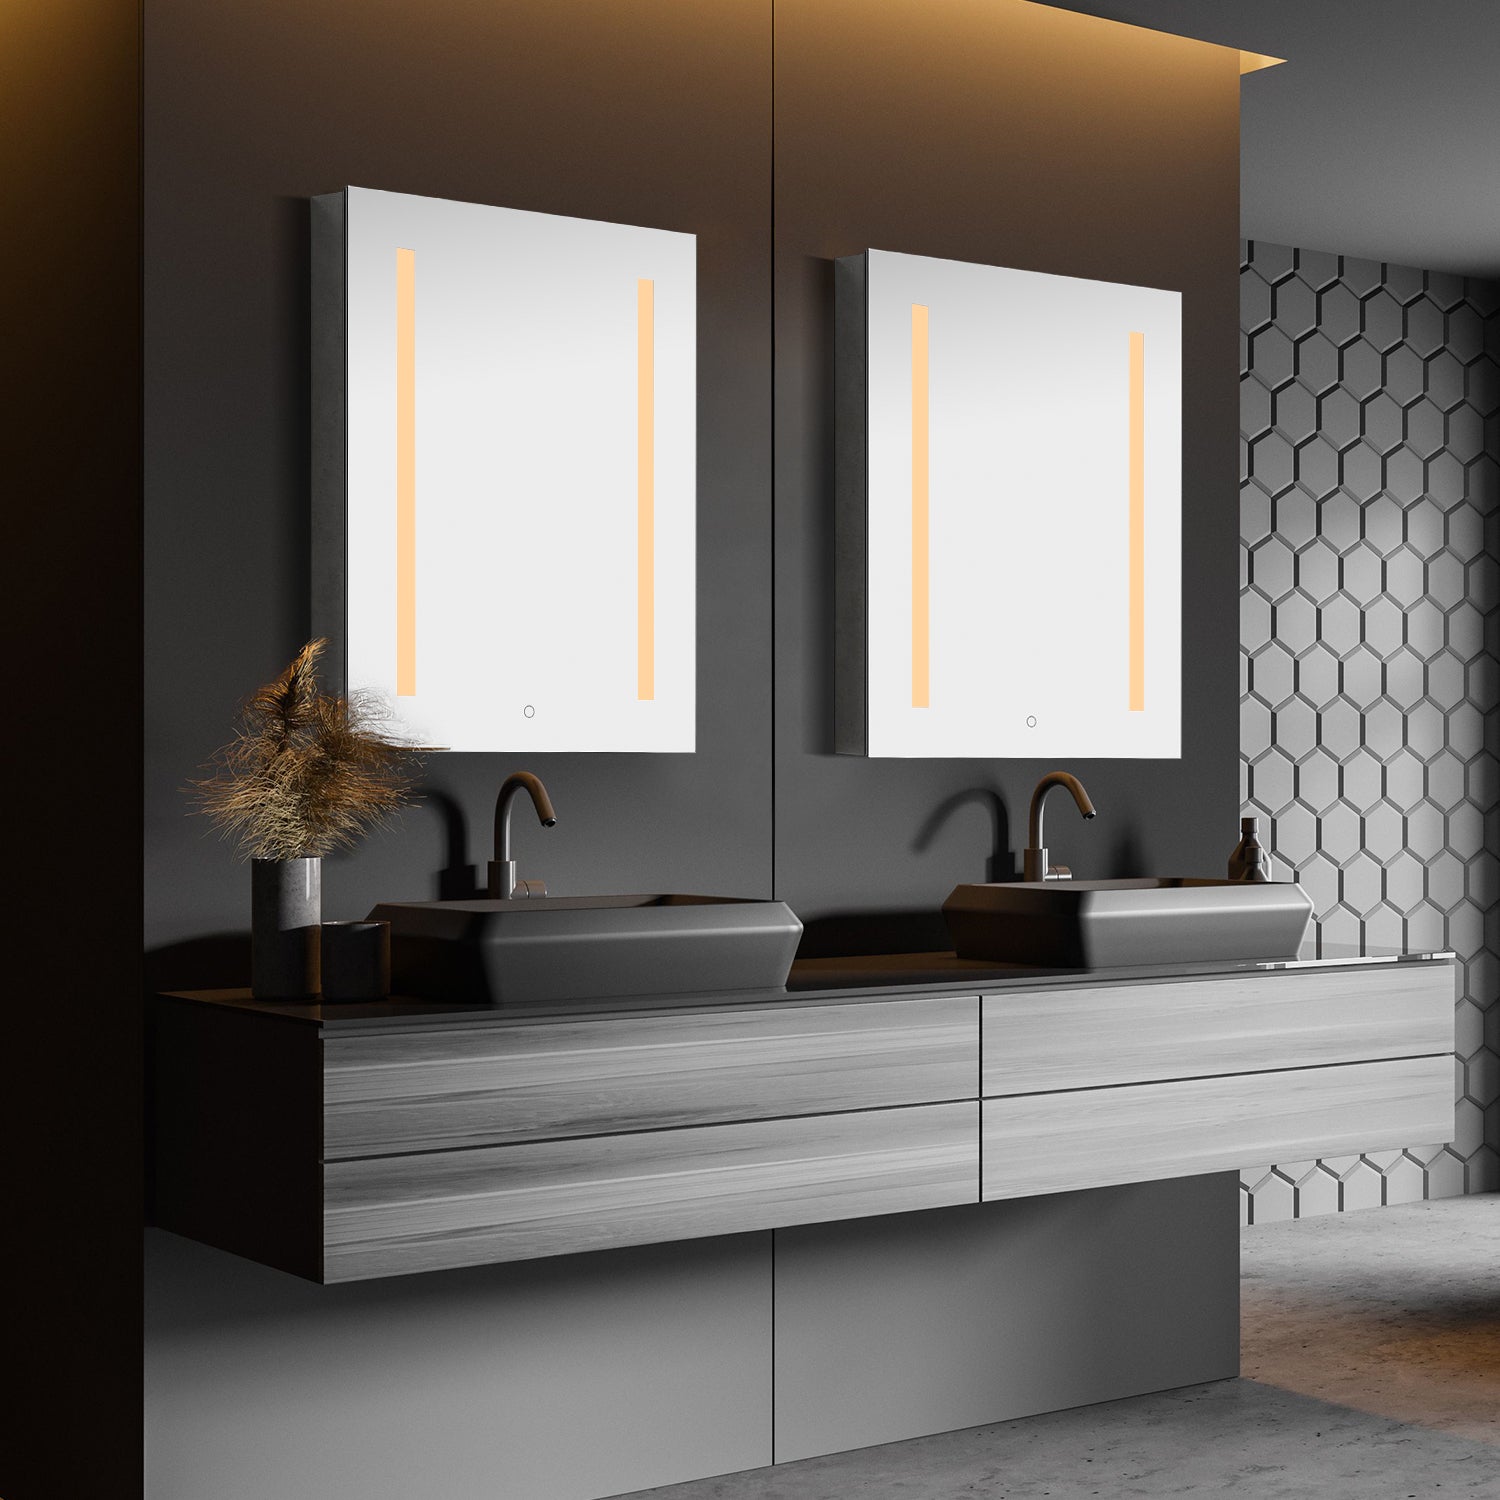 Catola Rectangle Frameless Surface-Mount/Recessed LED Lighted Bathroom Medicine Cabinet